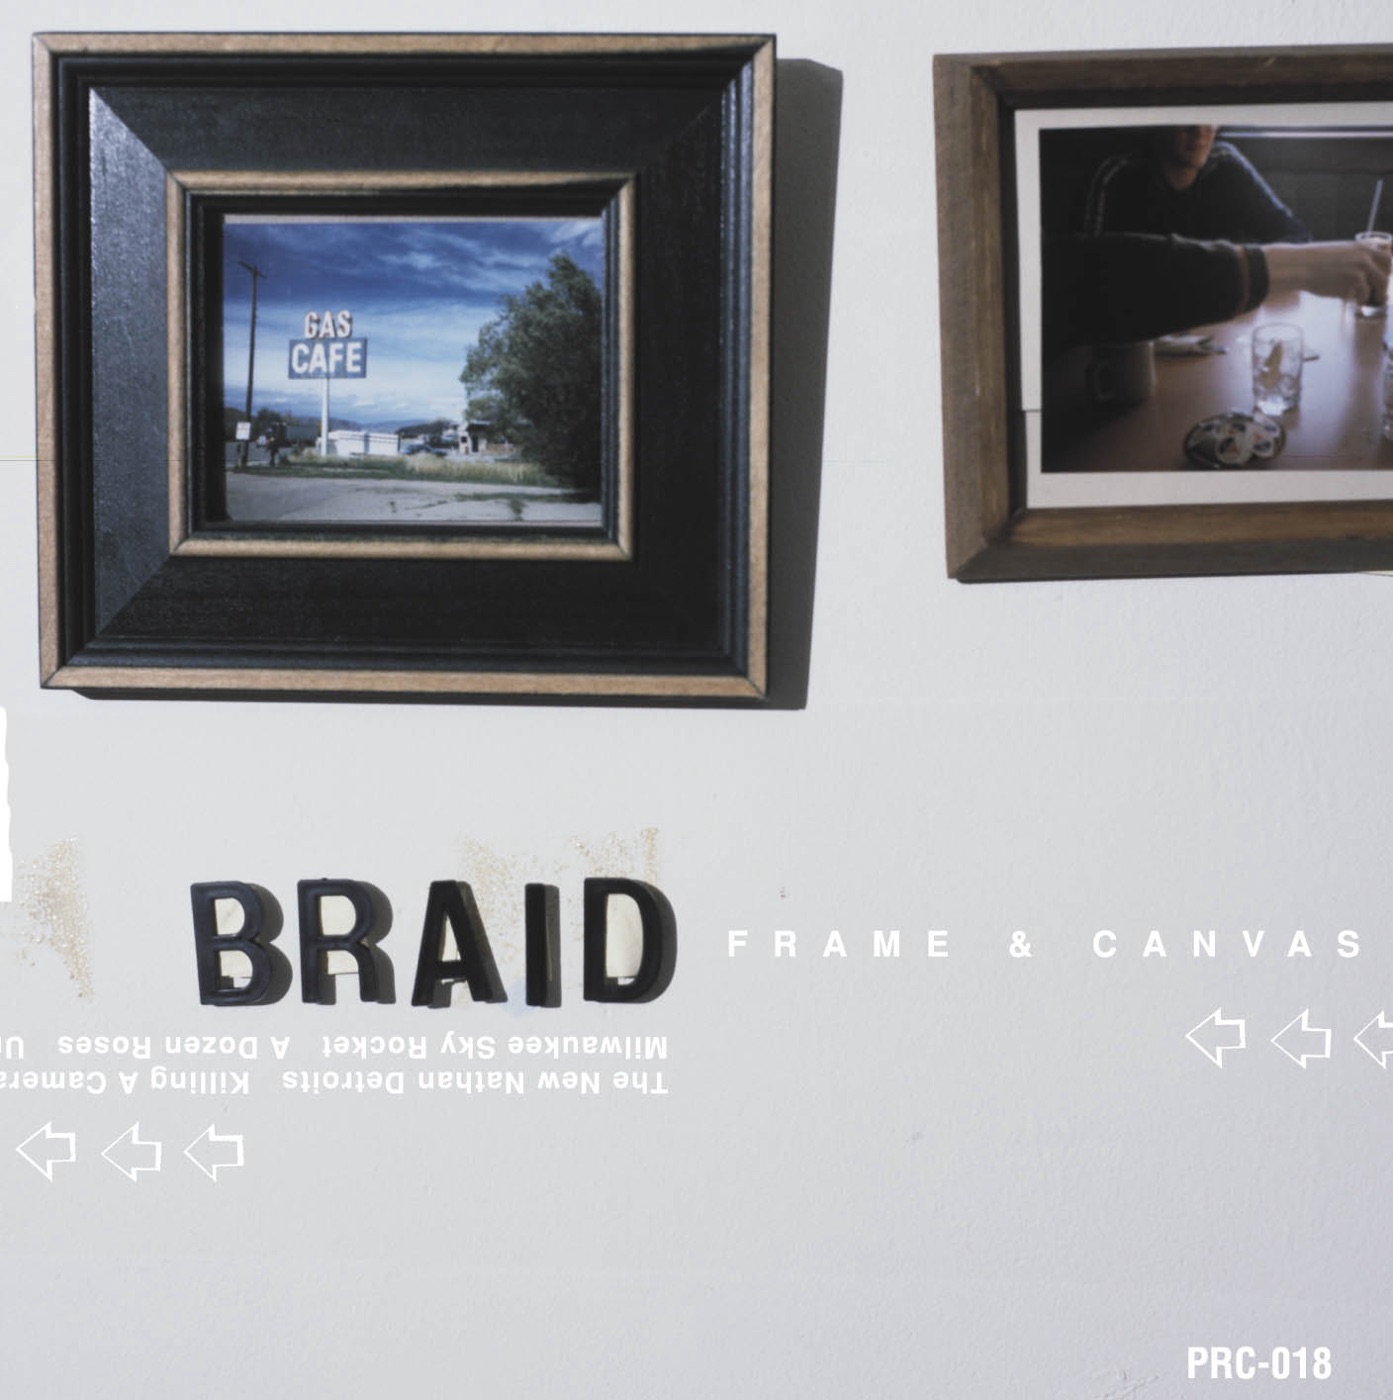 Frame & Canvas by Braid, Frame & Canvas